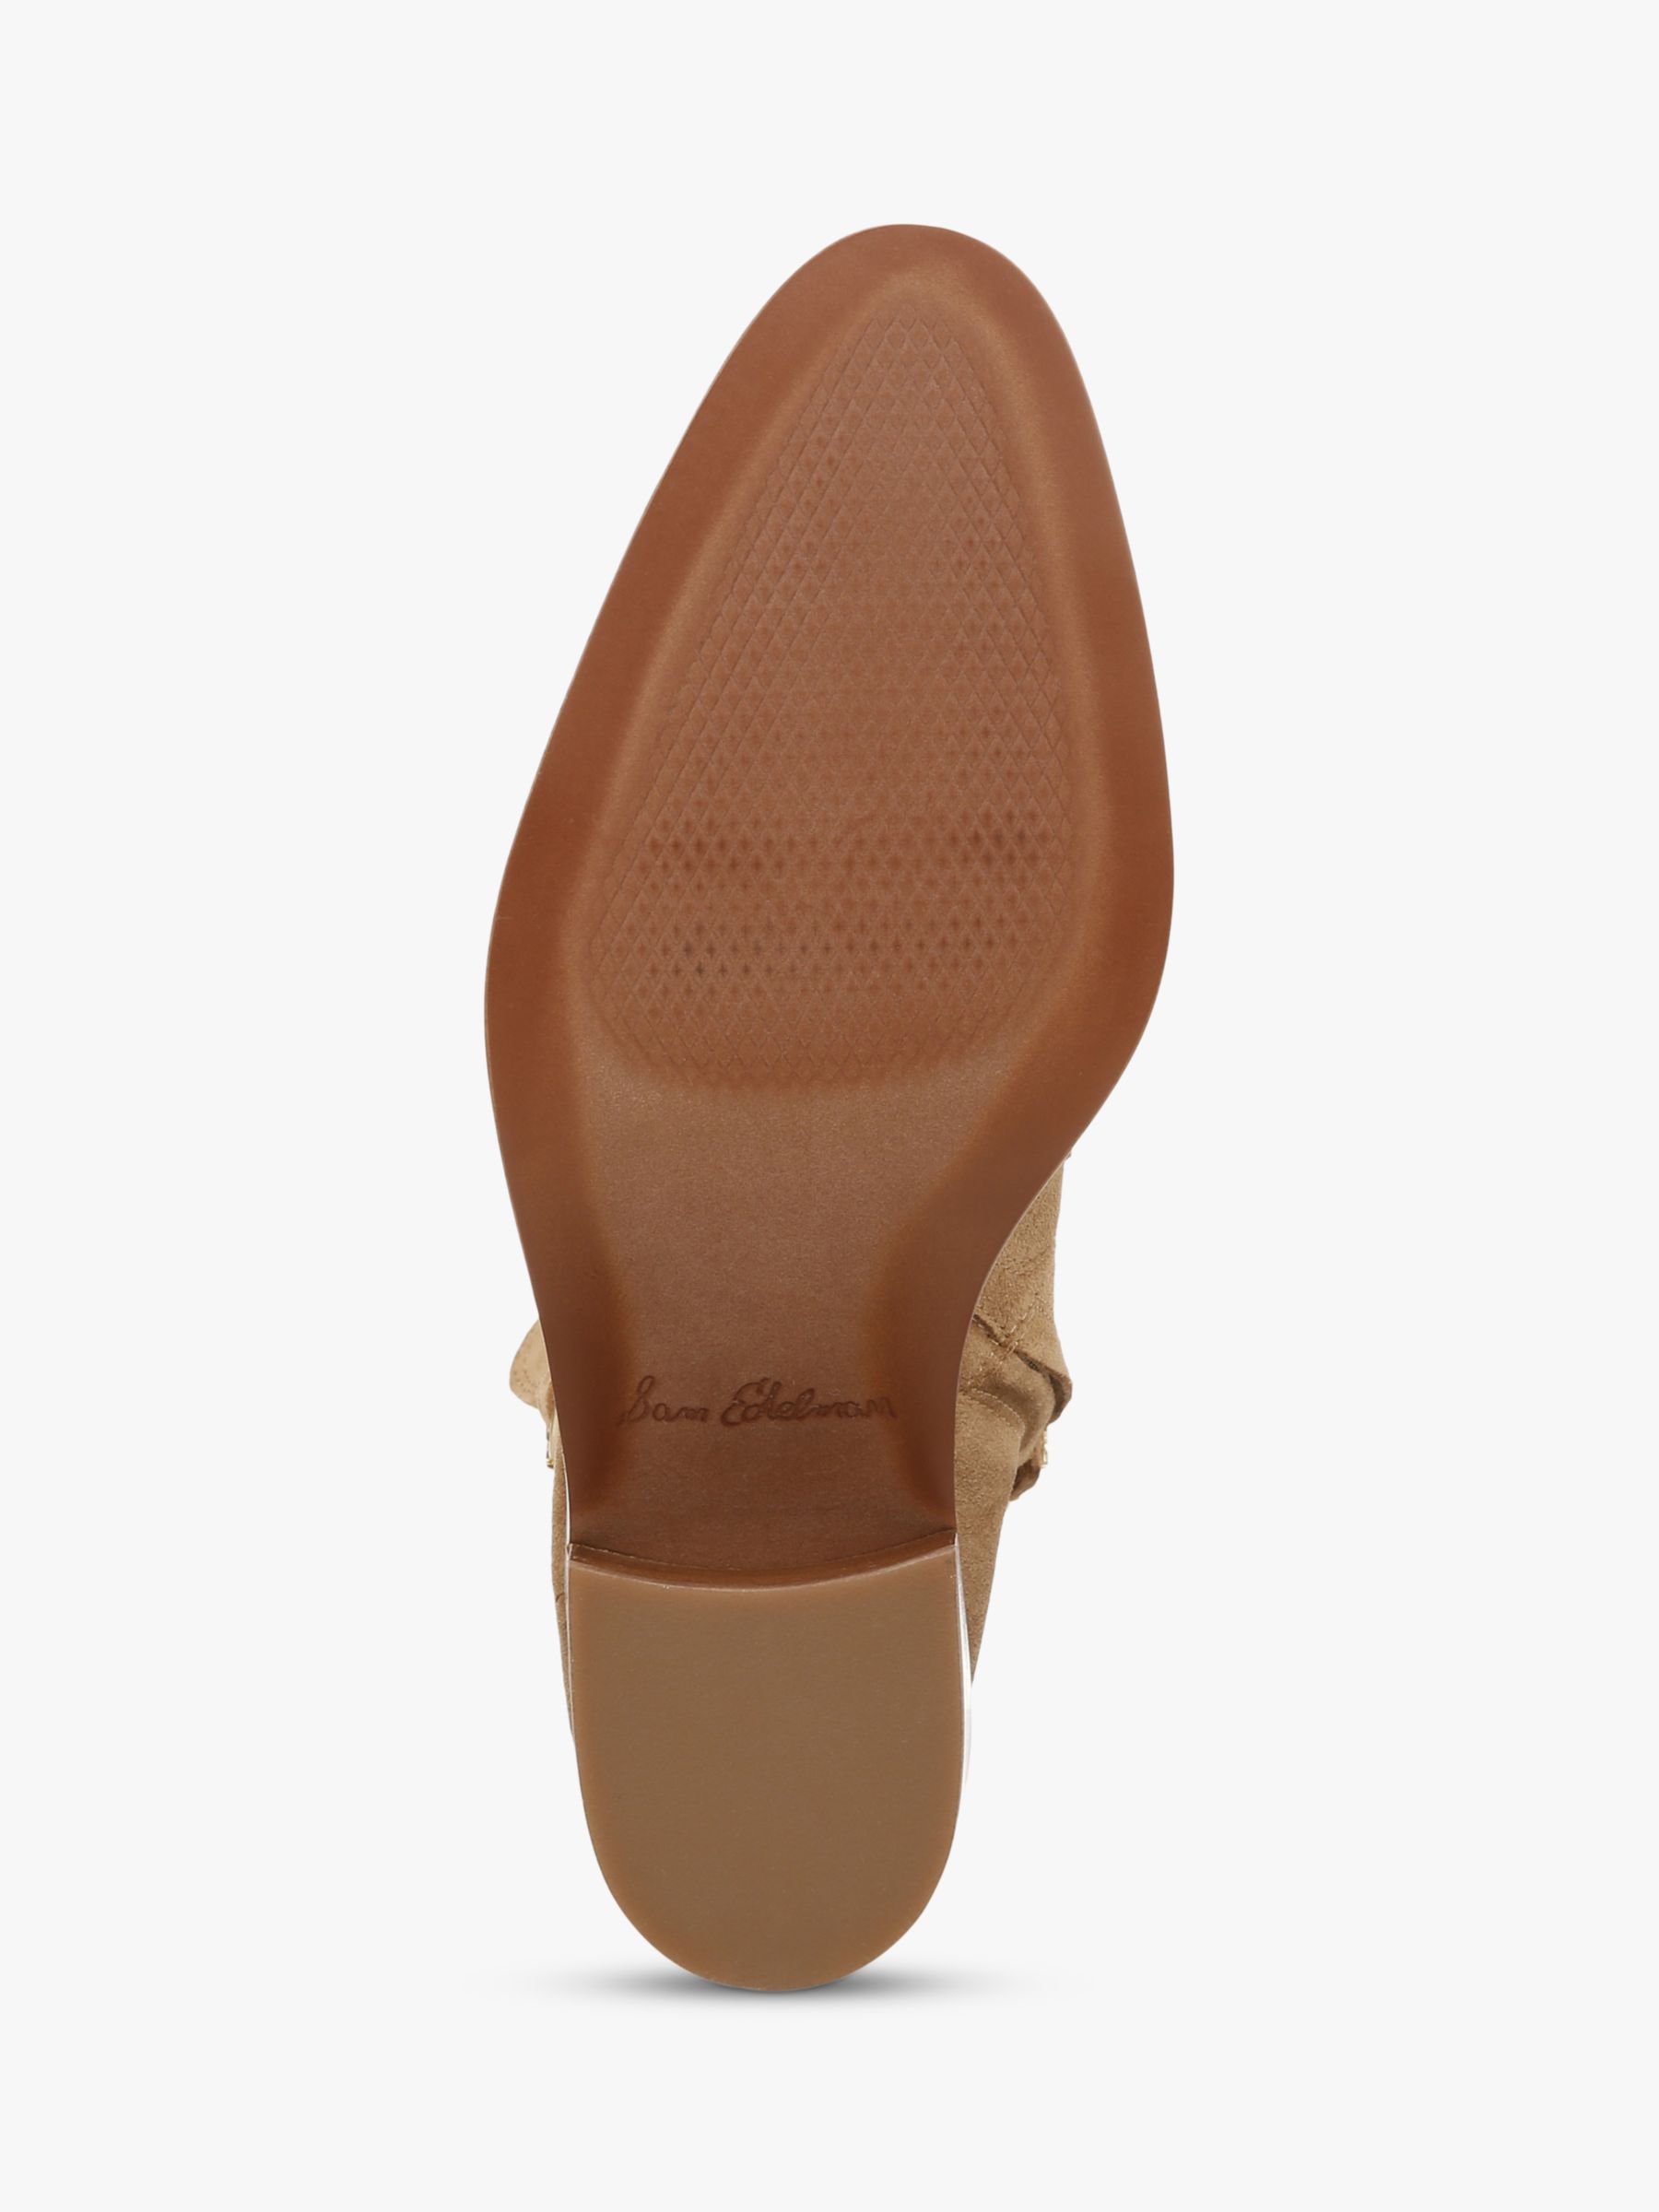 Sam Edelman Simona Leather Ankle Boots, Golden Caramel, 5